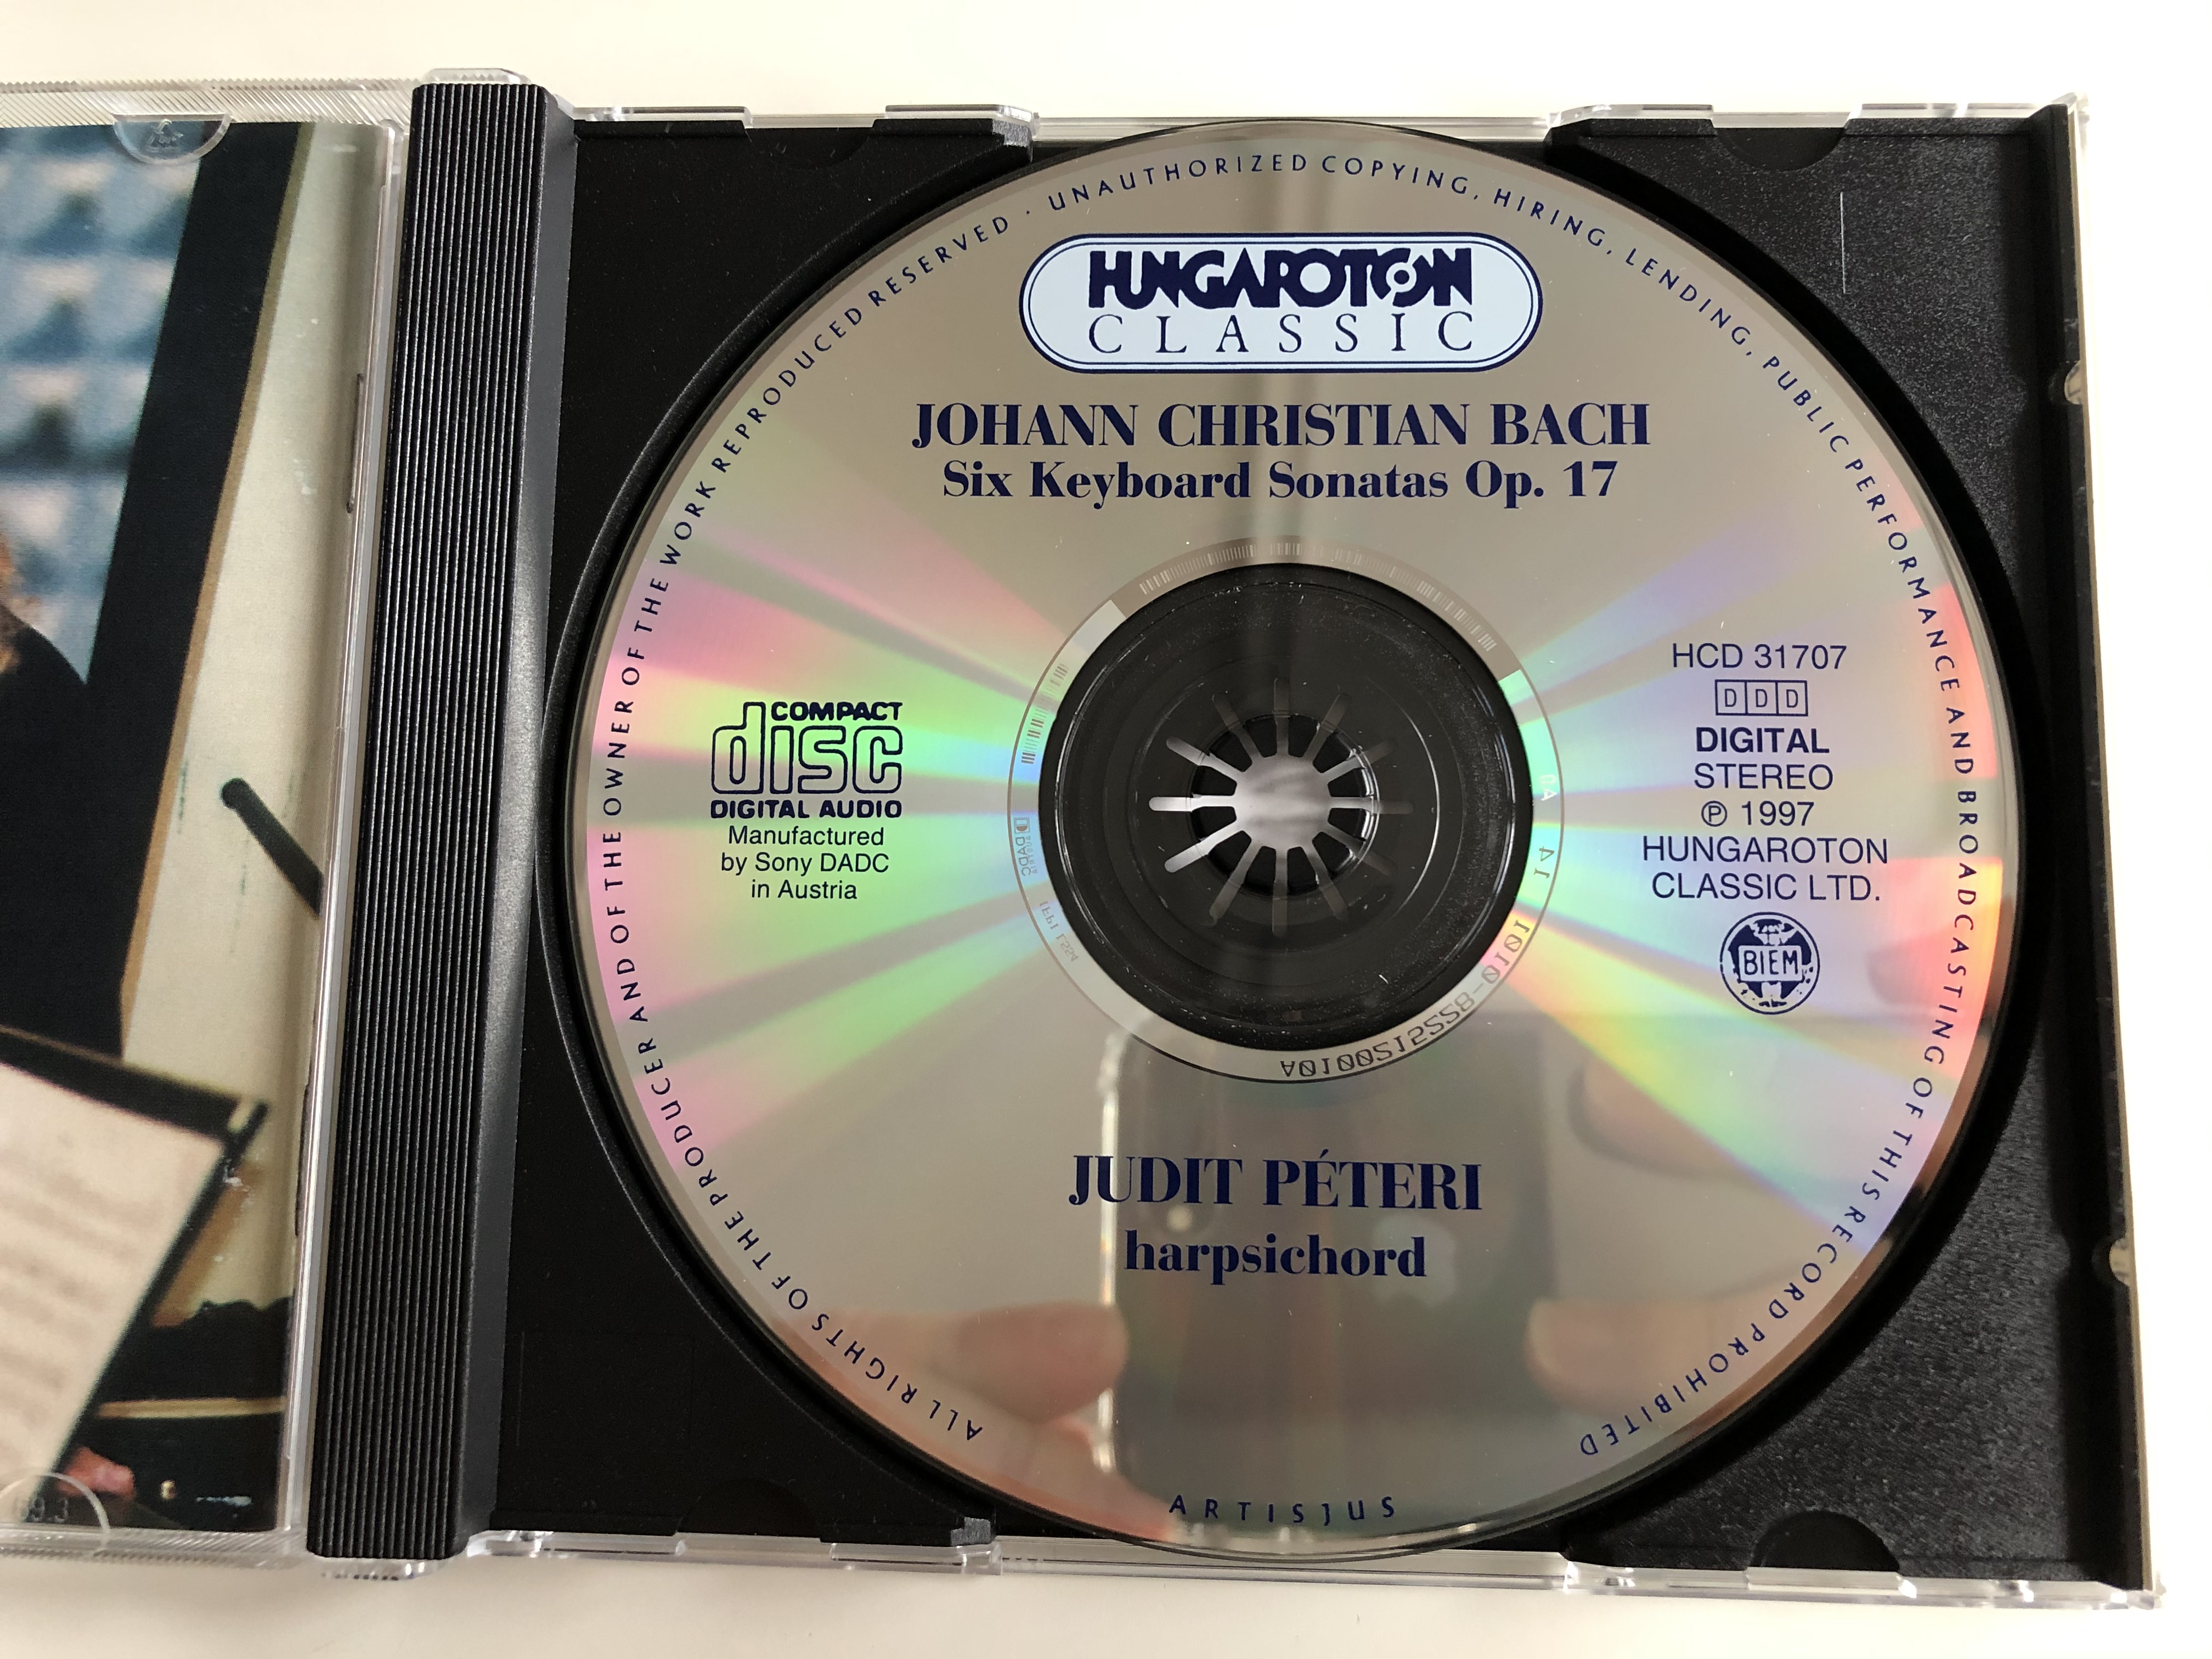 johann-christian-bach-six-keyboard-sonatas-op.17-judit-p-teri-harpsichord-hungaroton-classic-audio-cd-1997-stereo-hcd-31707-7-.jpg